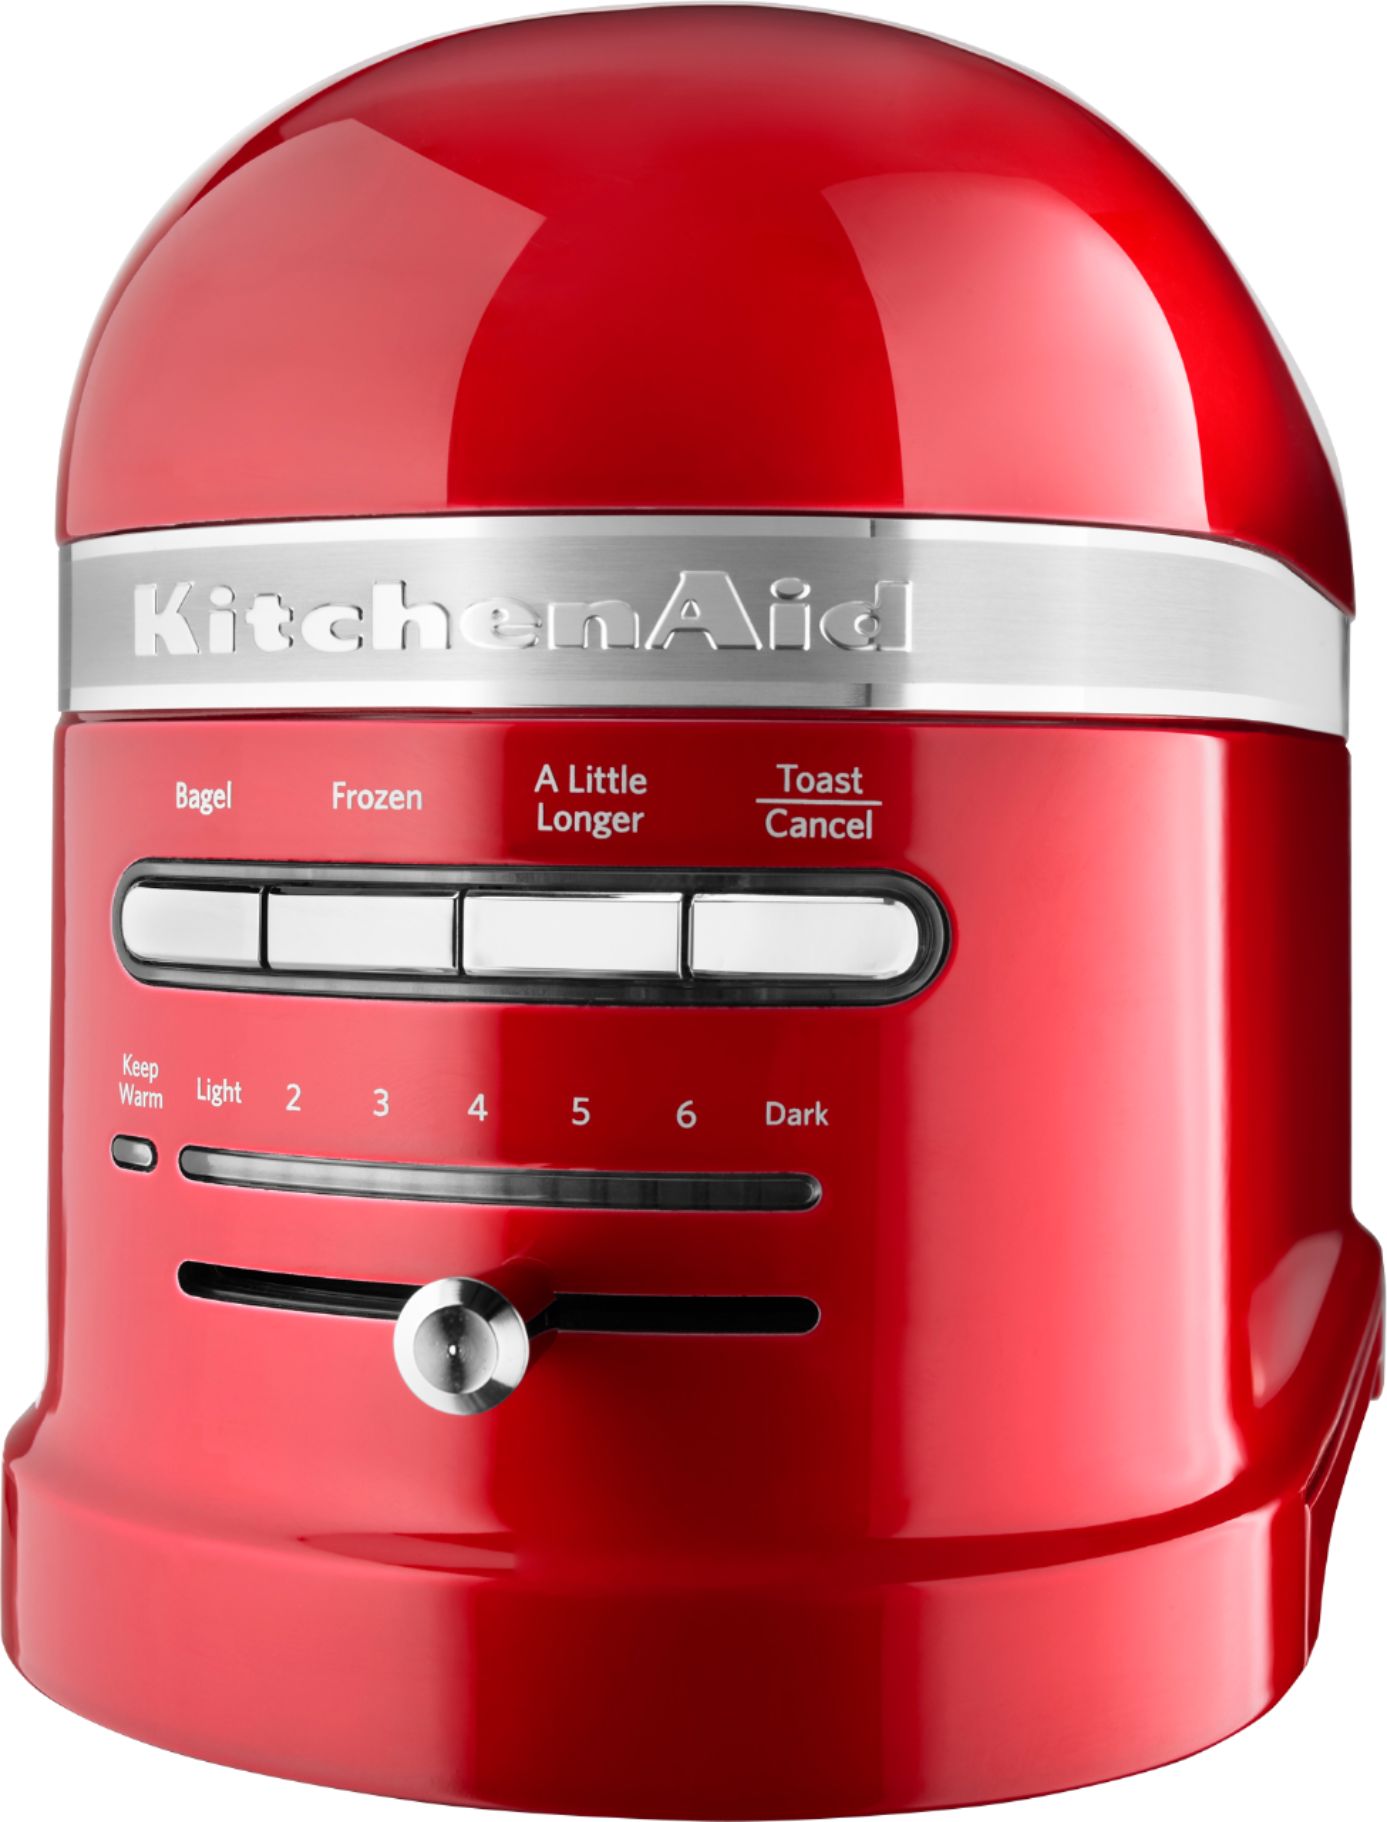 KitchenAid 5KTT780EWH Pro-Line Series Toaster - 2-slice - White